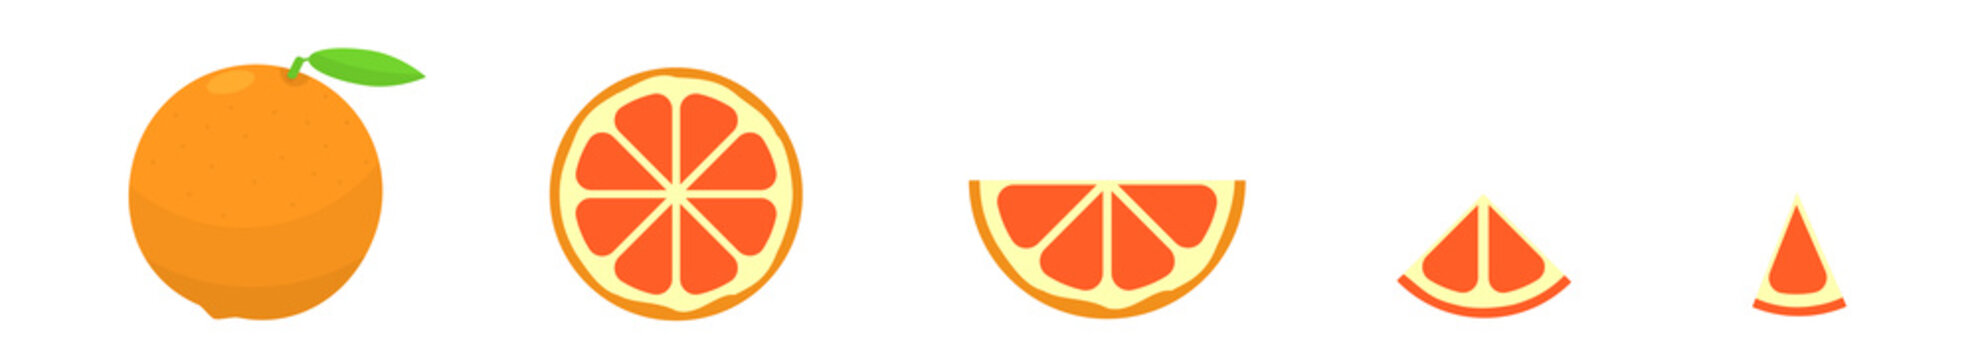 Grapefruit Vector illustration